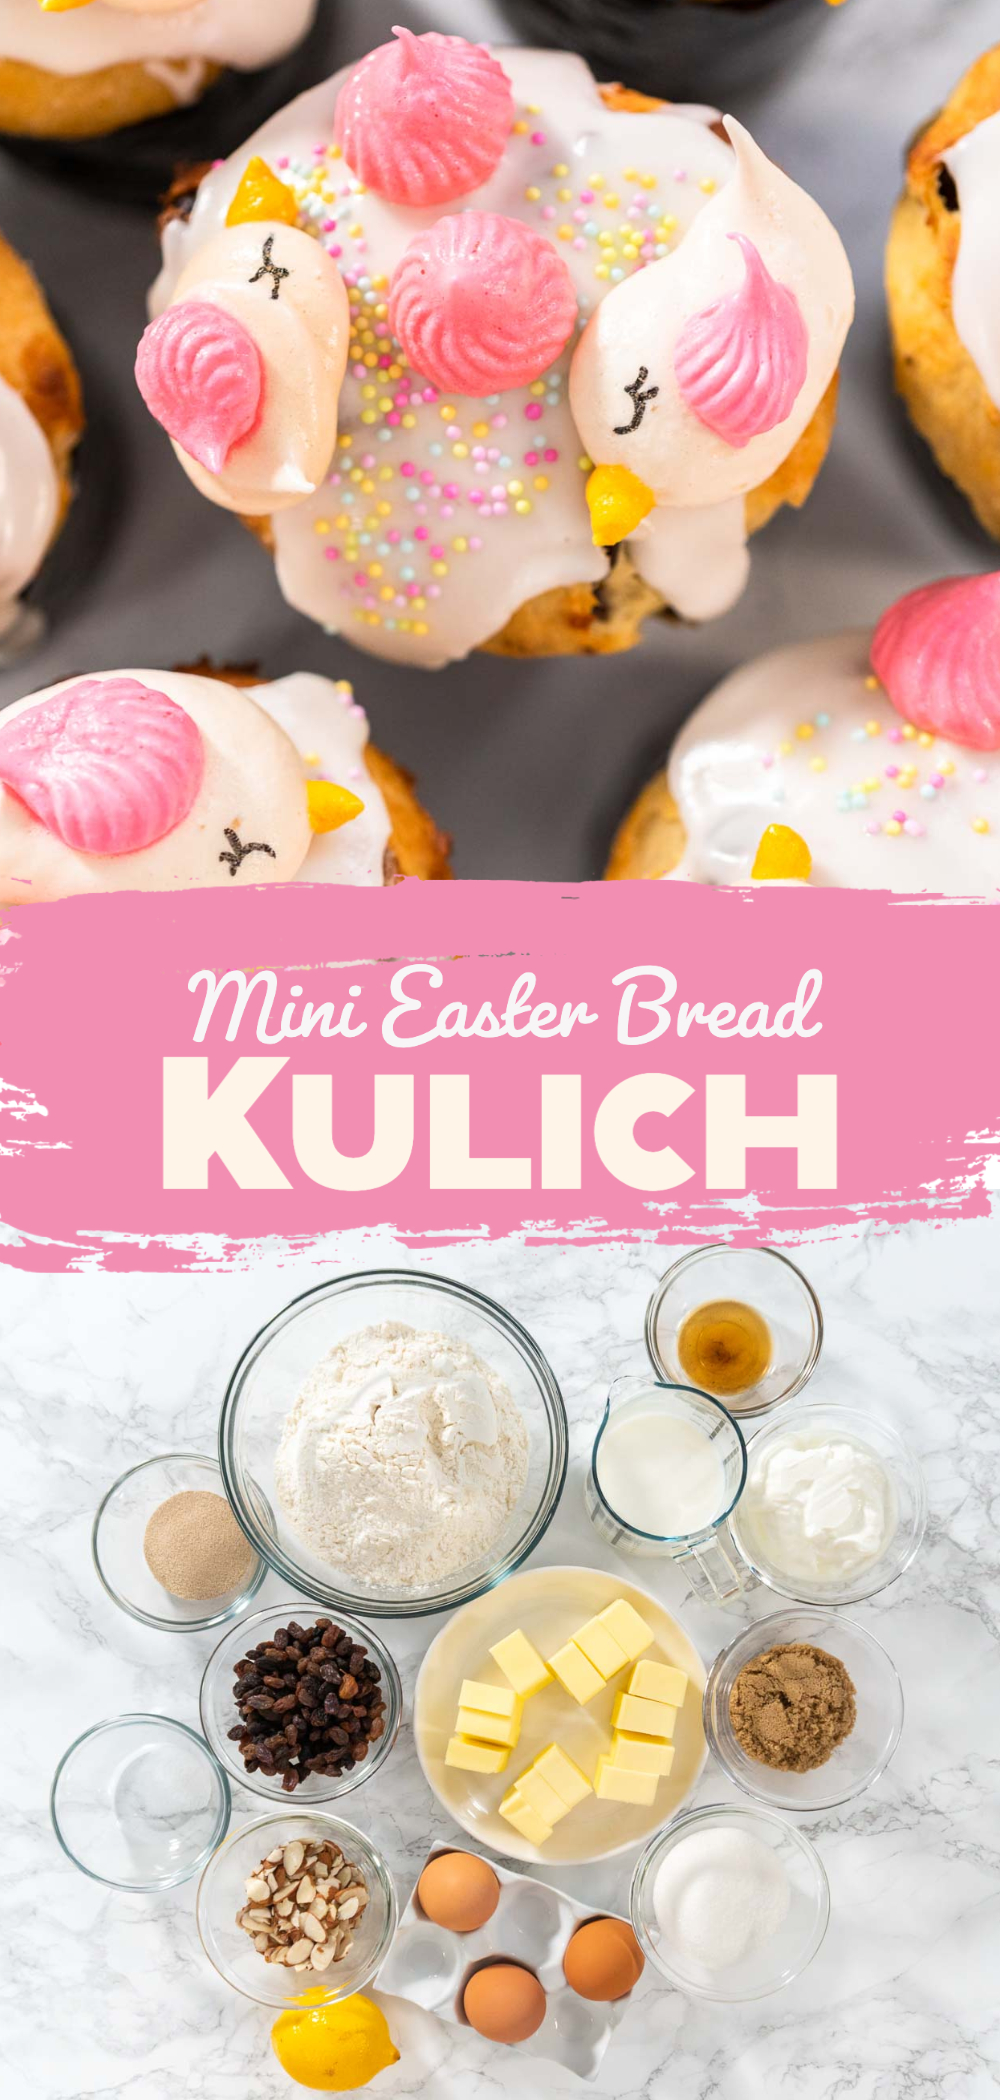 Mini Easter Bread Kulich